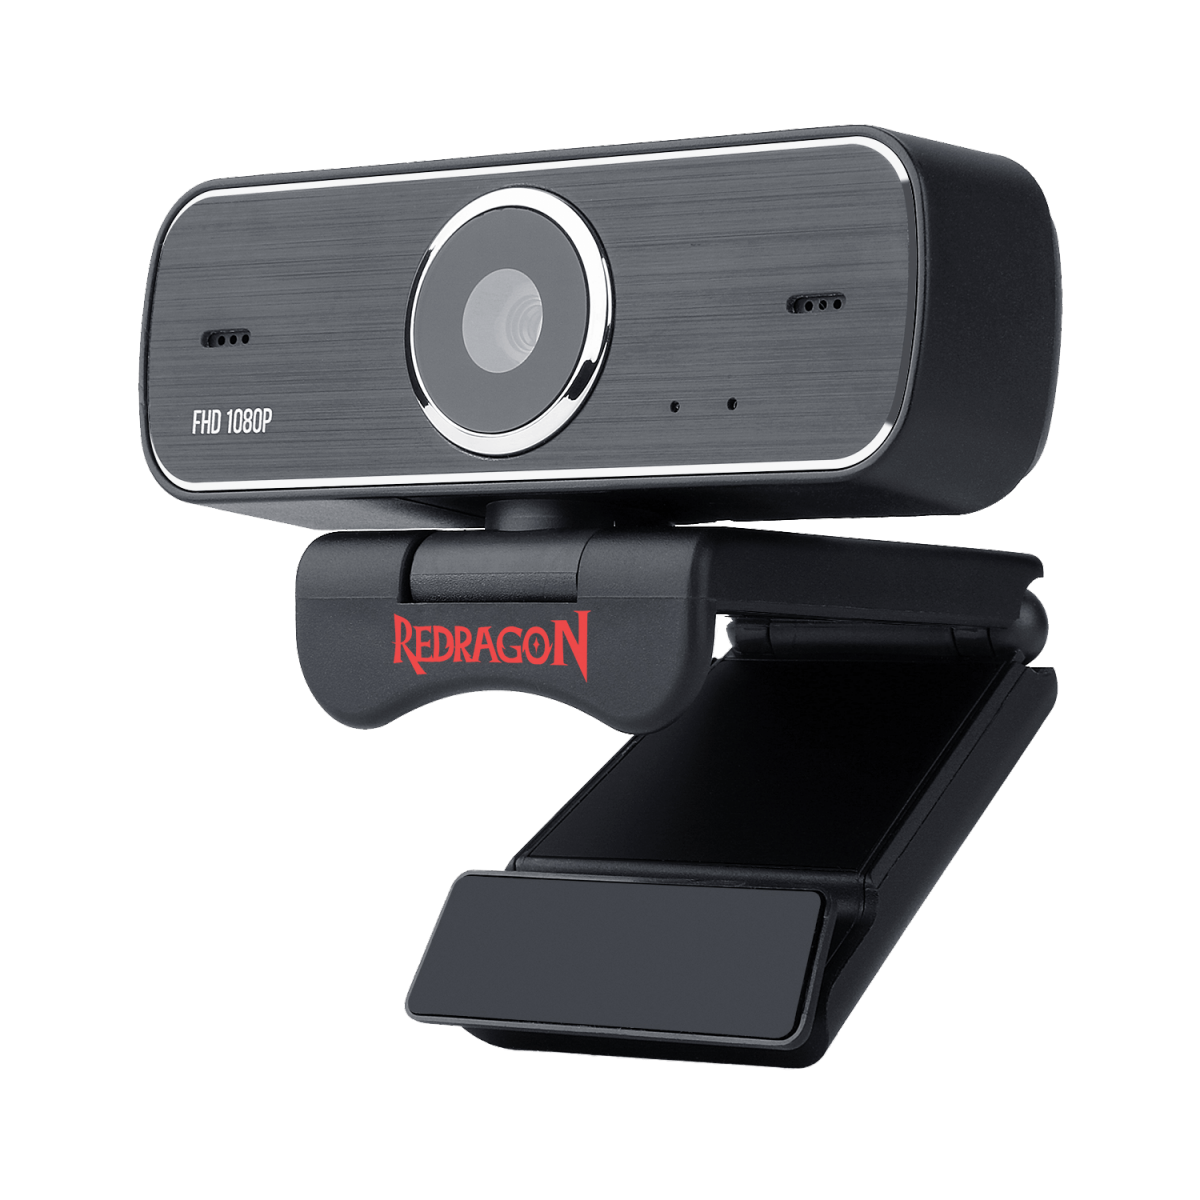 WebCam Redragon Hitman, FullHD, 1080p, GW800 - Open Box